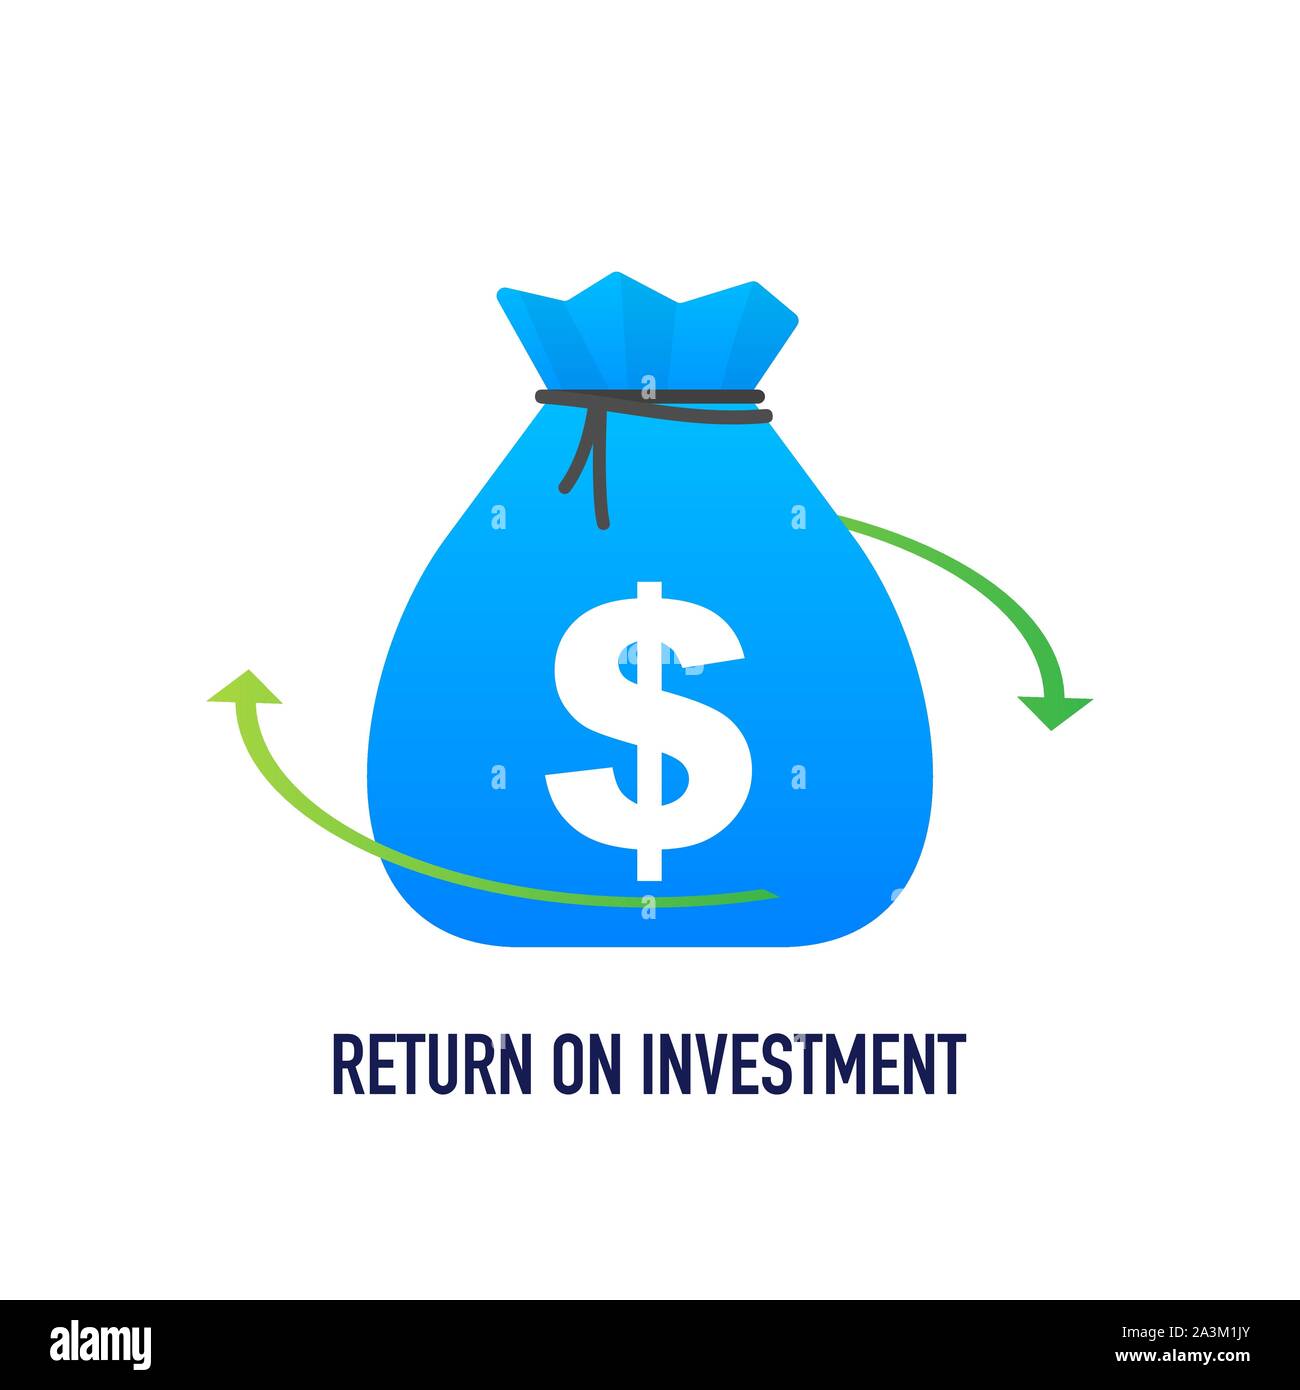 Return On Investment Concept Vector Illustration In Isometric Design